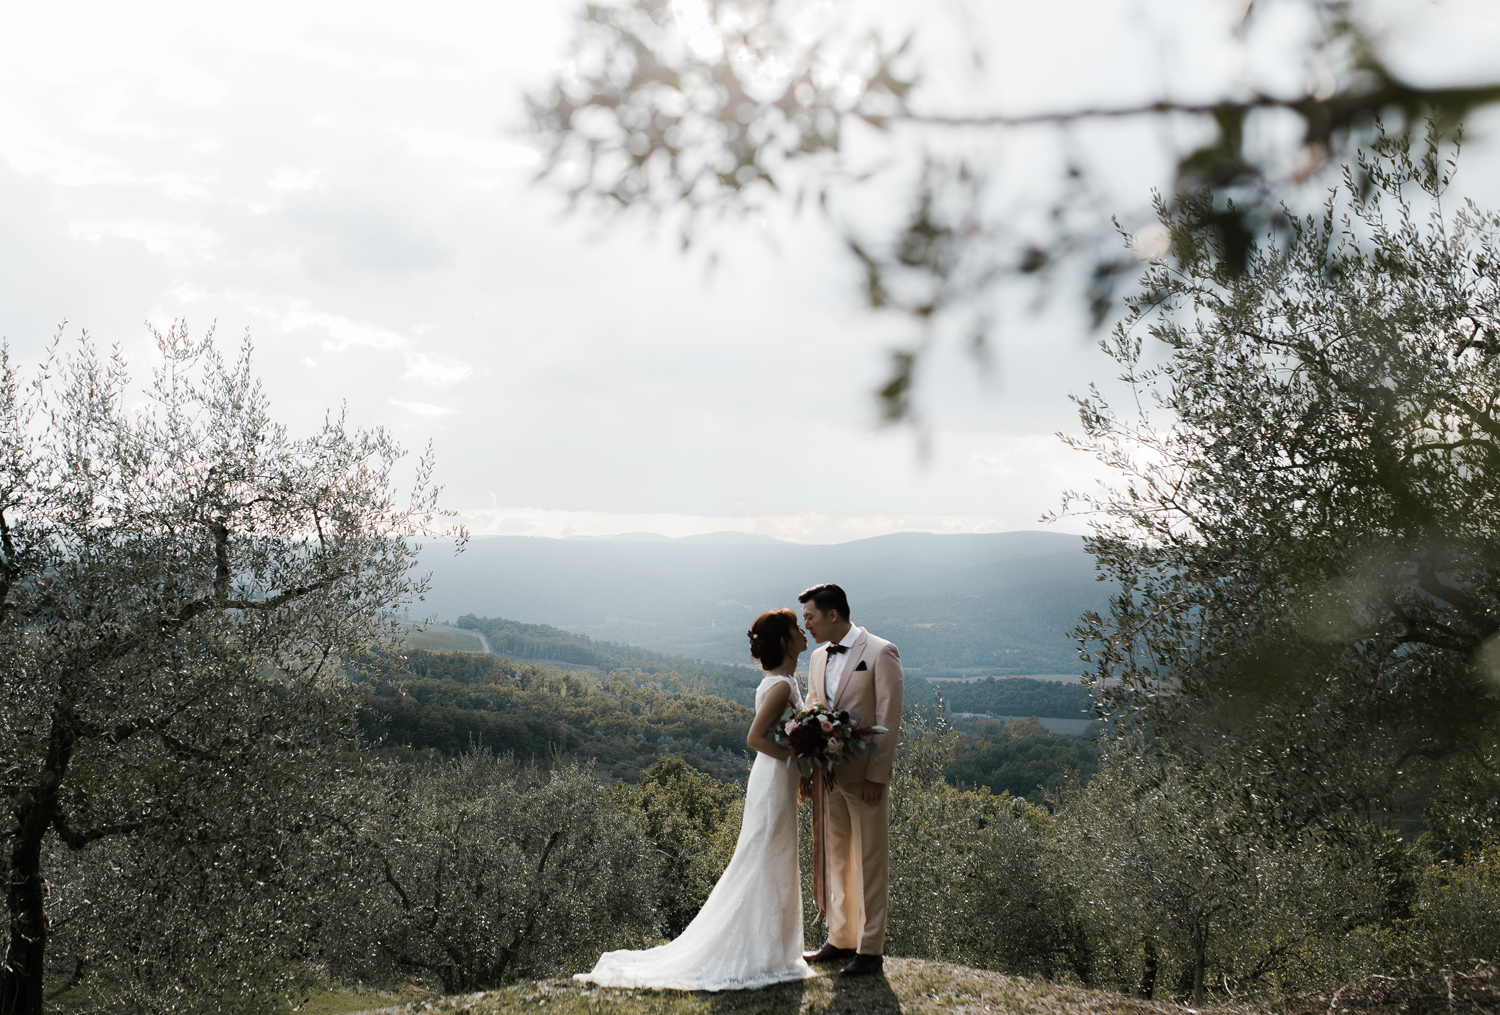 059-wedding-photographer-italy-tuscany-mindy-eddy.jpg